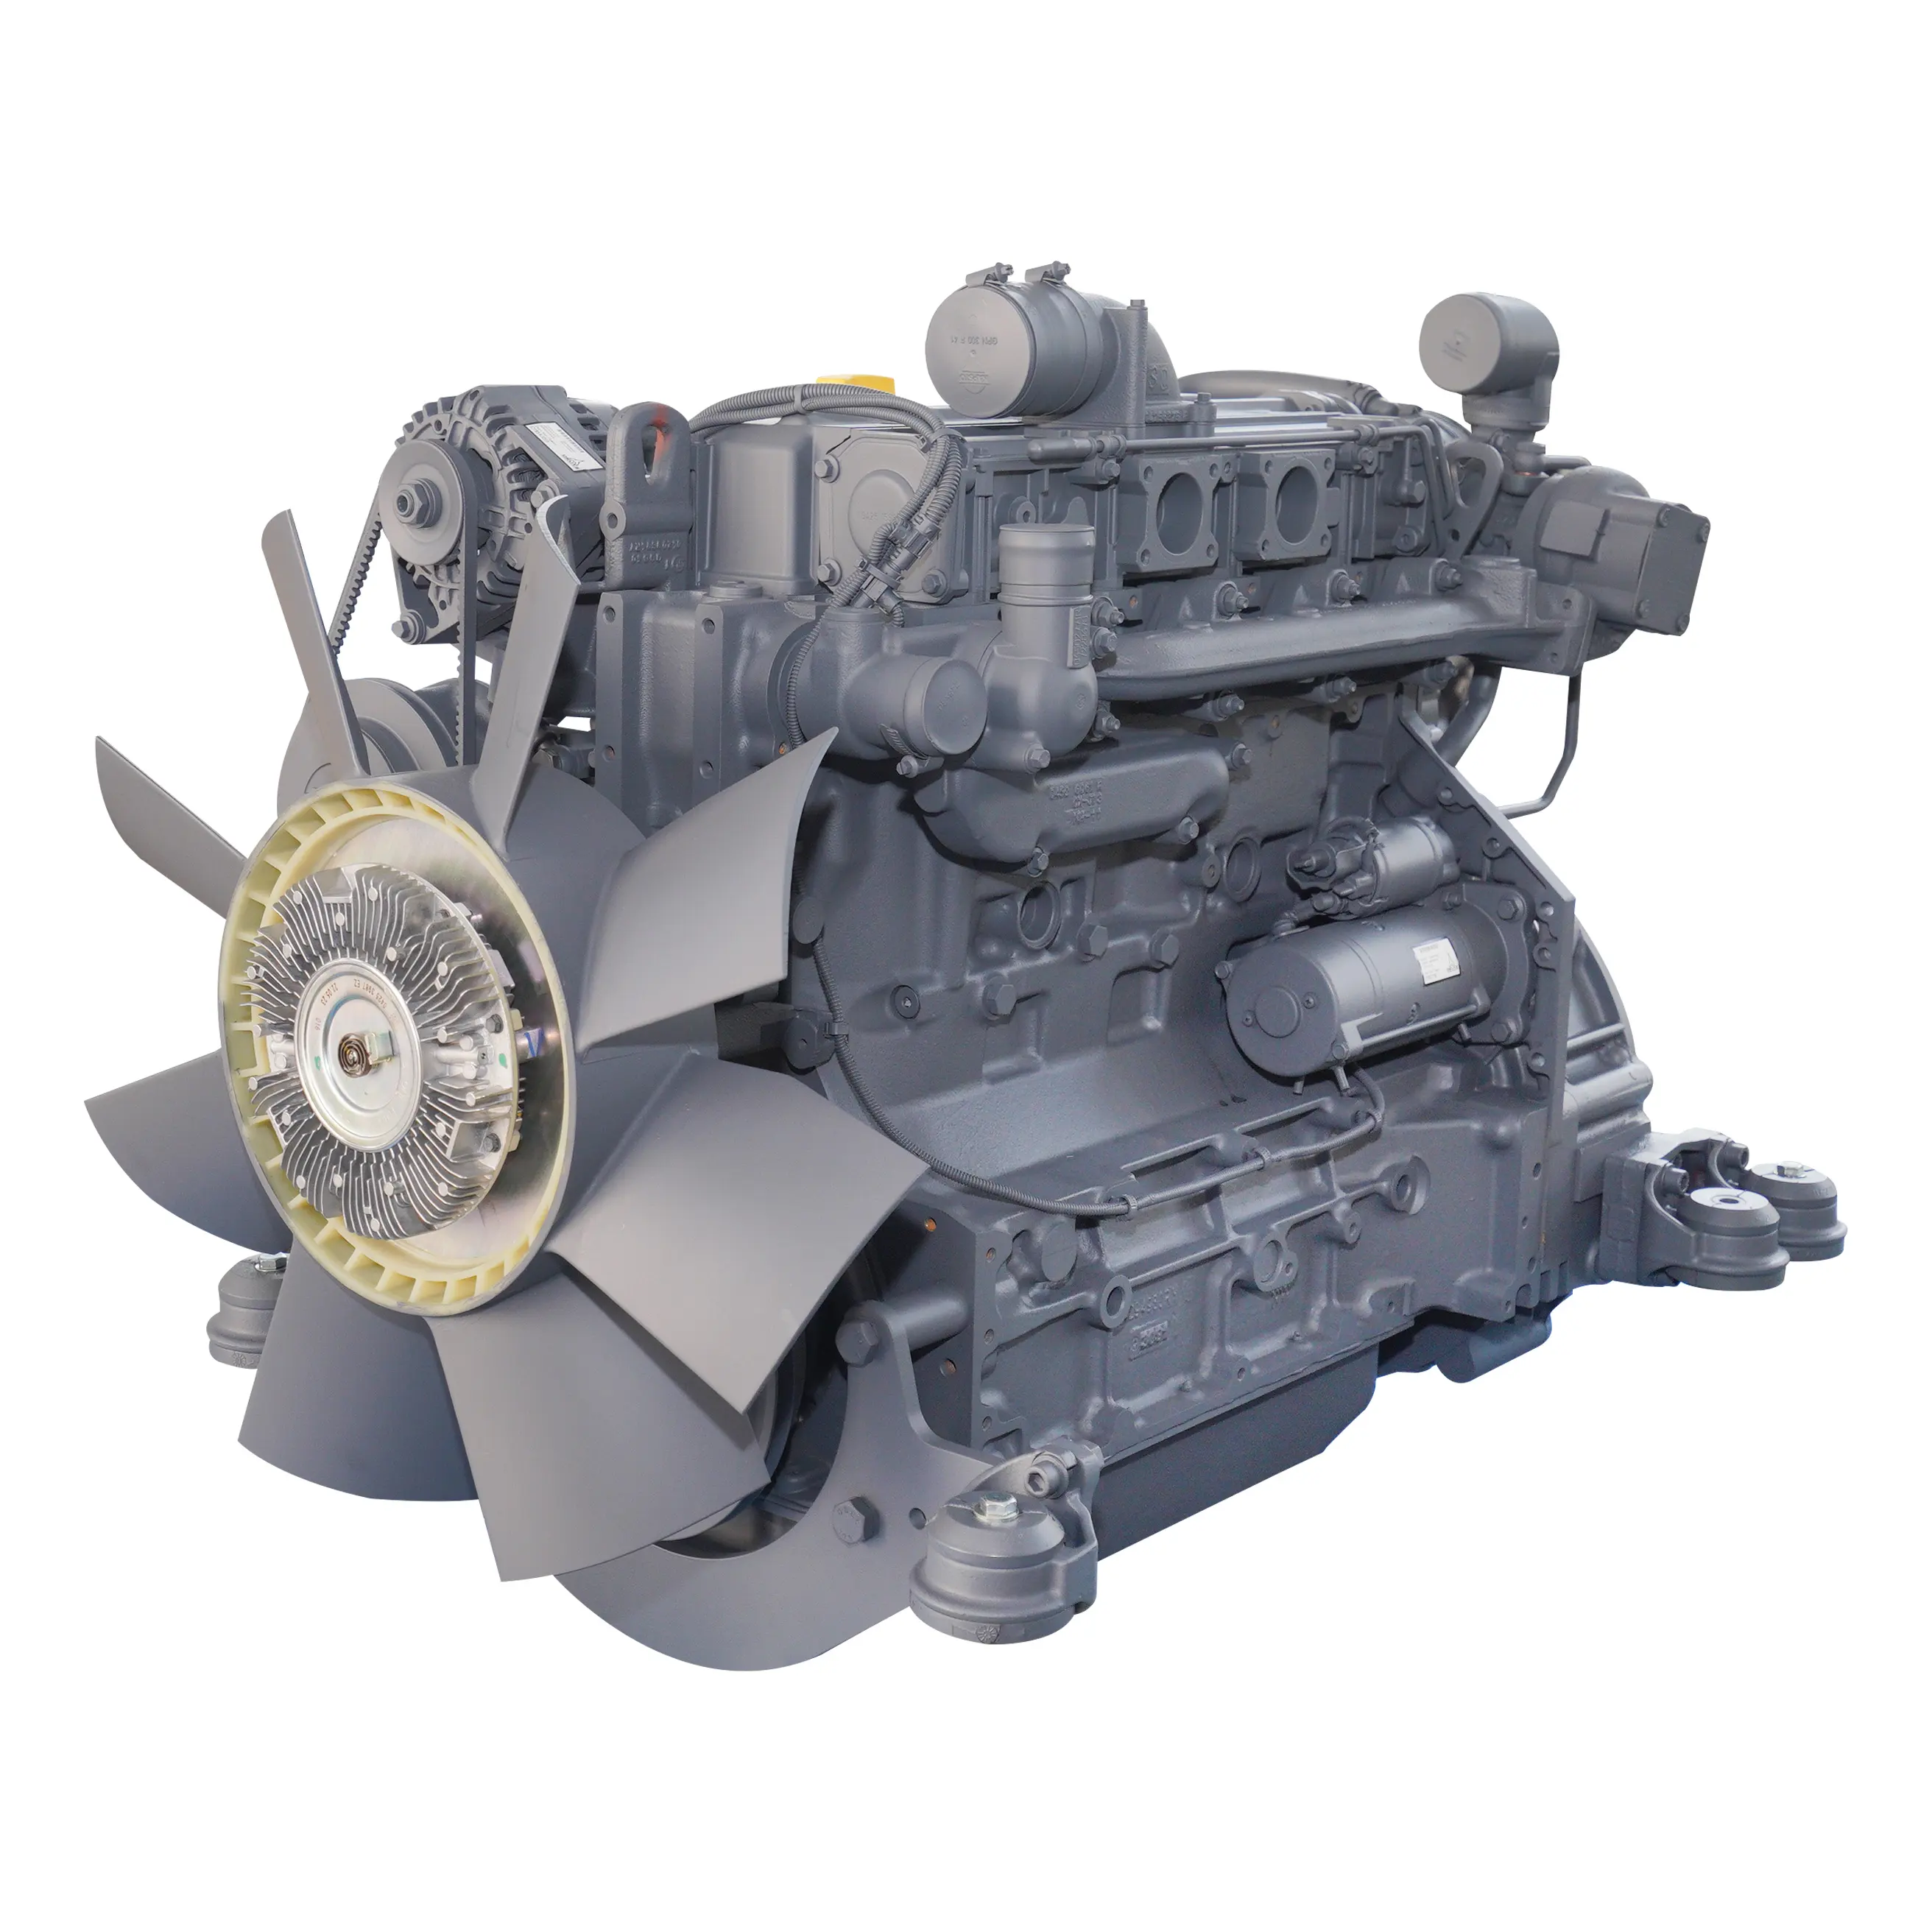 Genuine style 4 cylinders BF4M1013EC Deutz Engines Diesel Engine for construction machinery